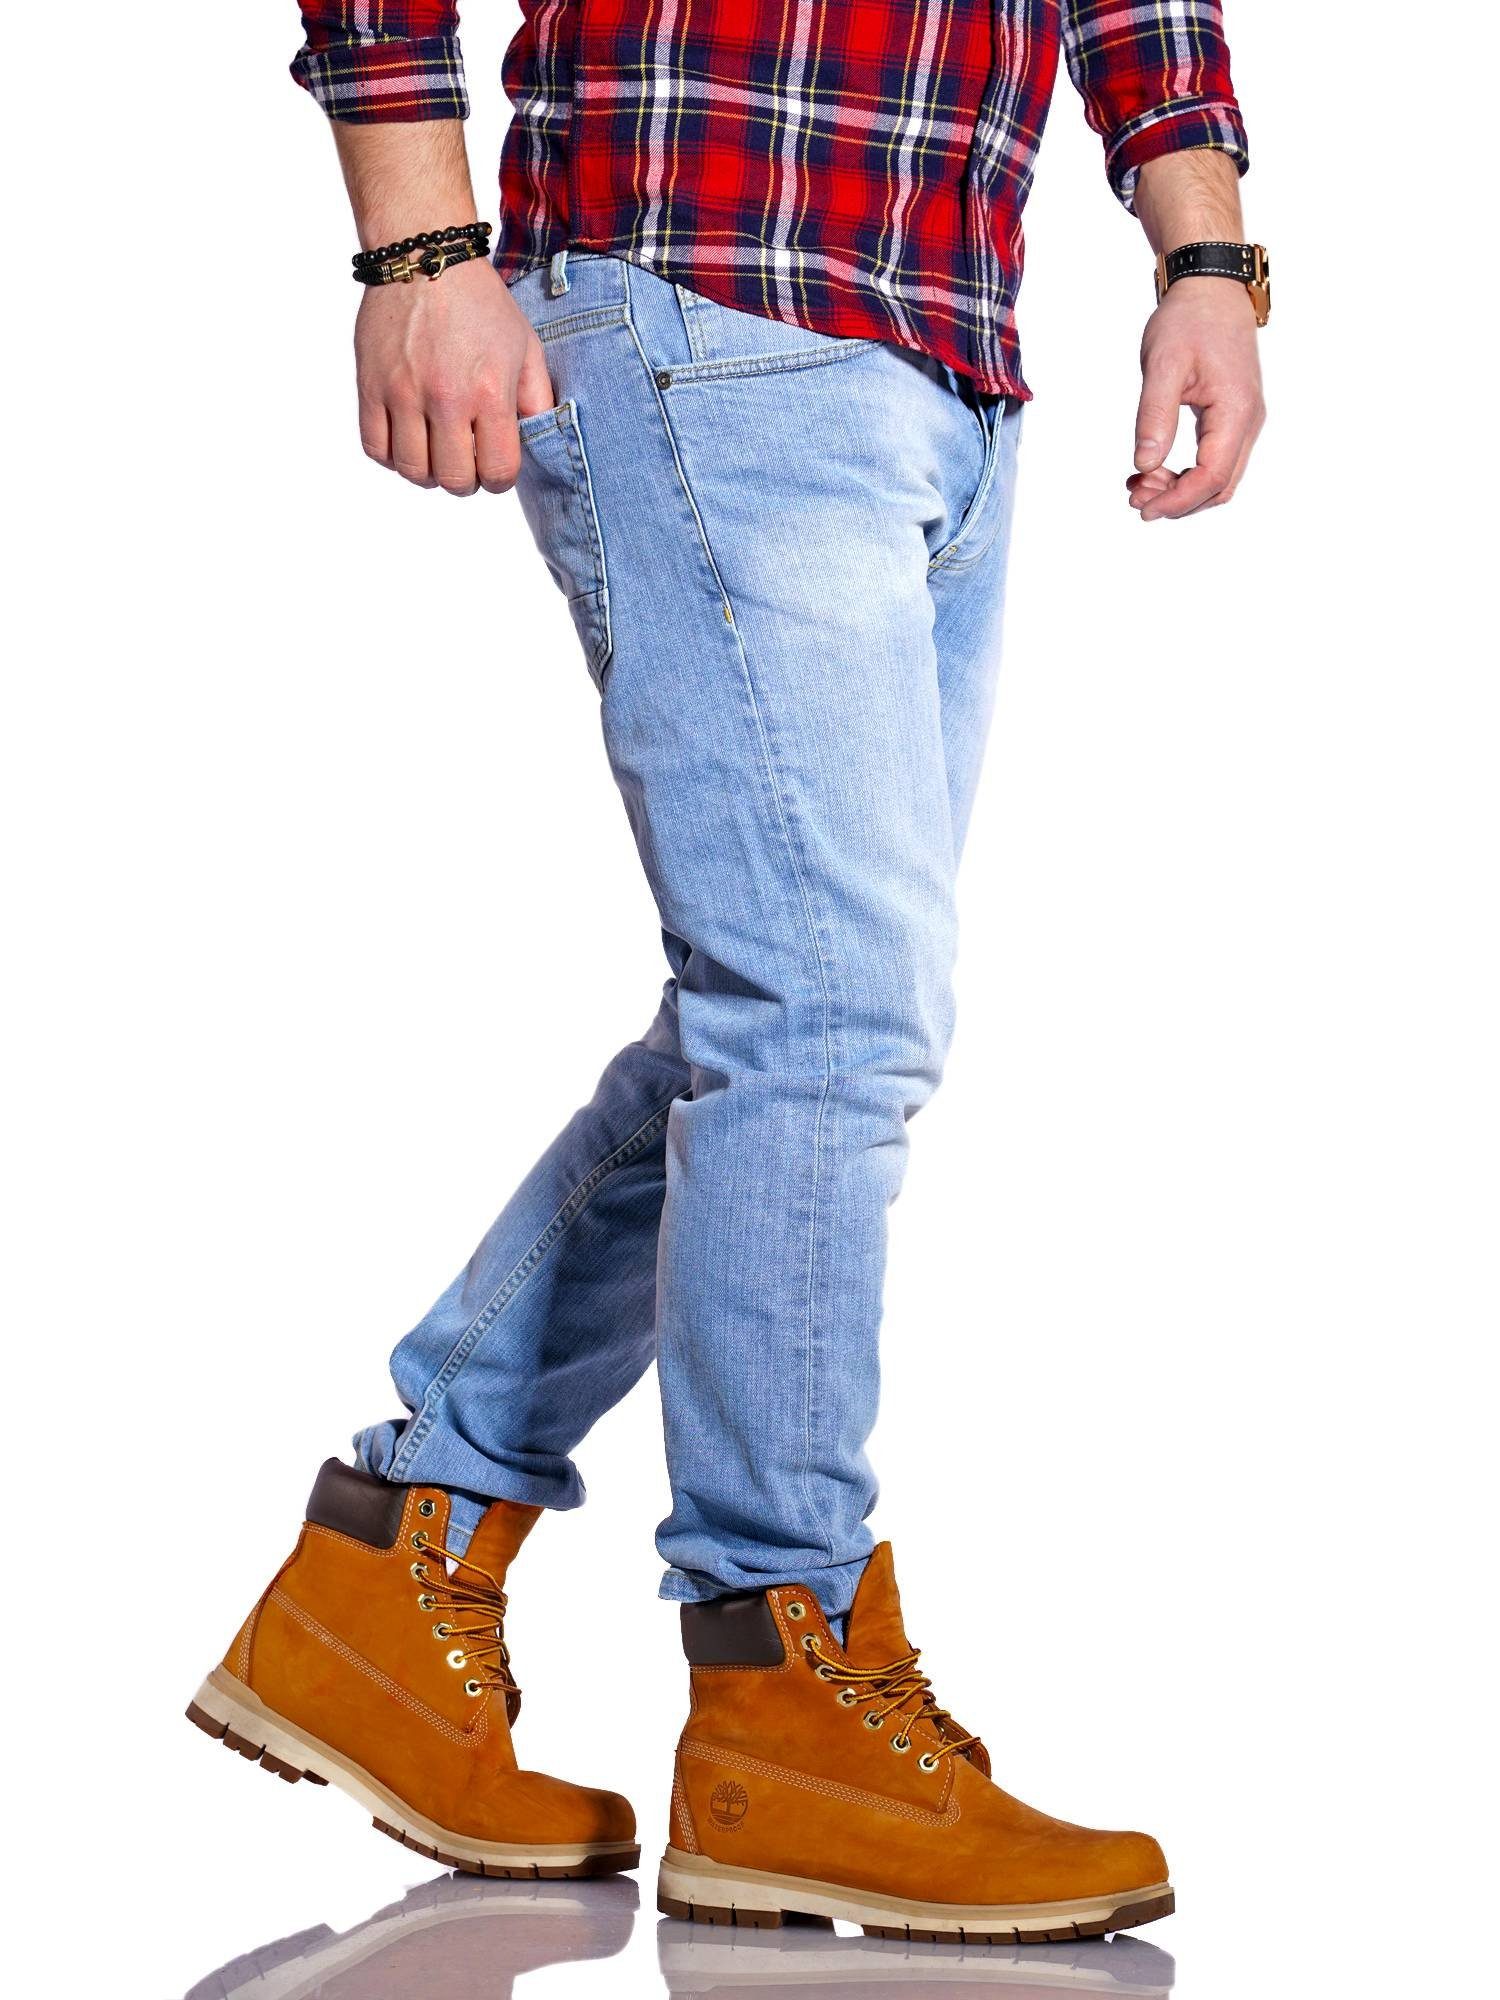 Nick im & hellblau Rello Reese geraden Schnitt Straight-Jeans